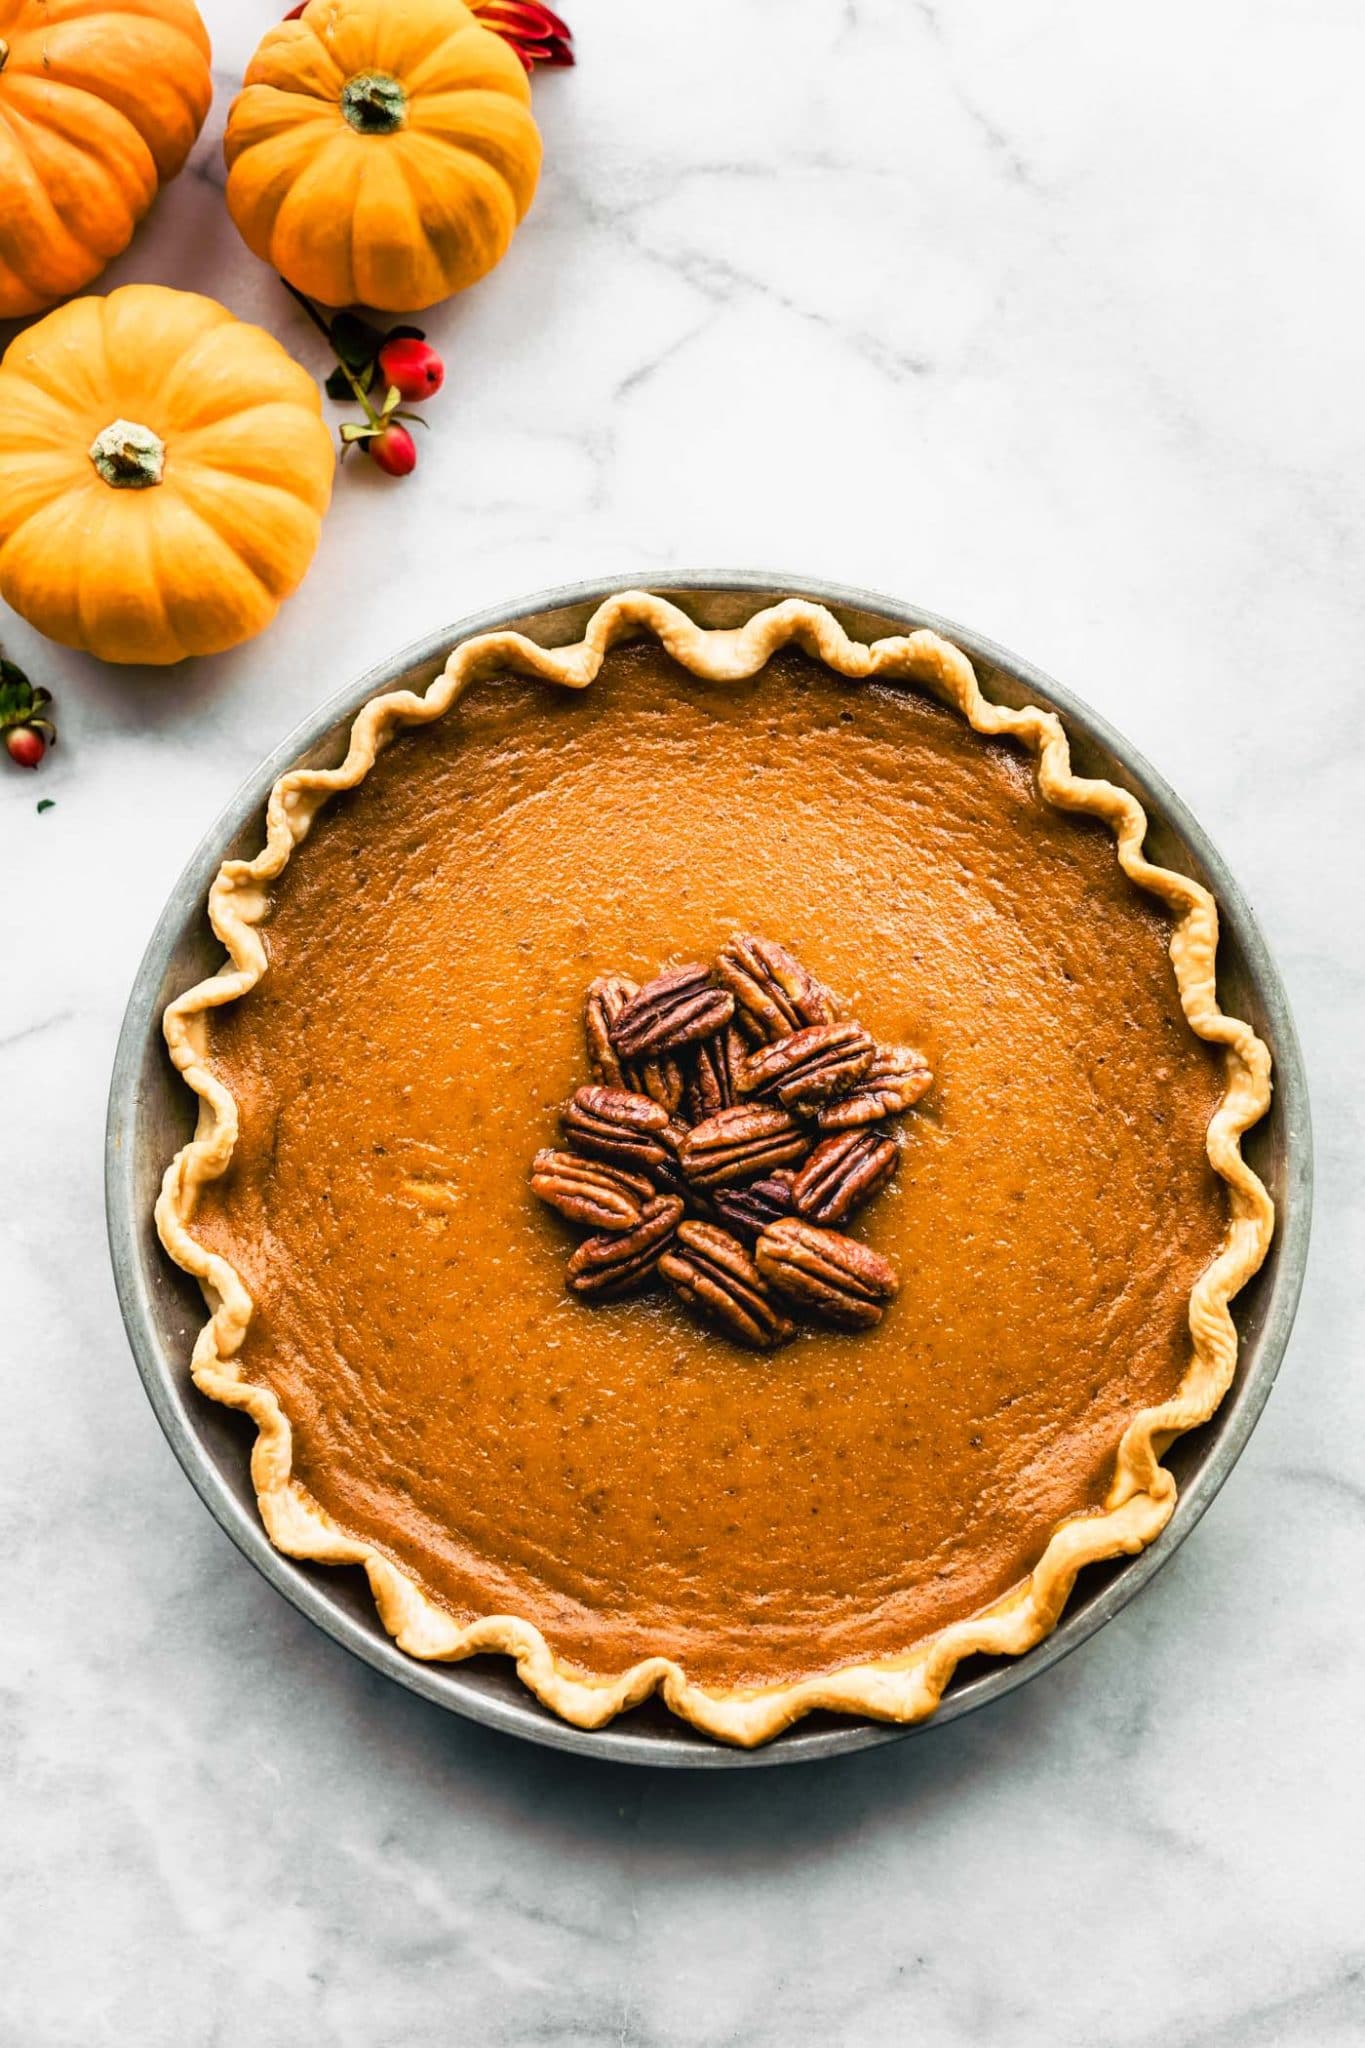 Whole gluten-free pumpkin pie with pecans on top